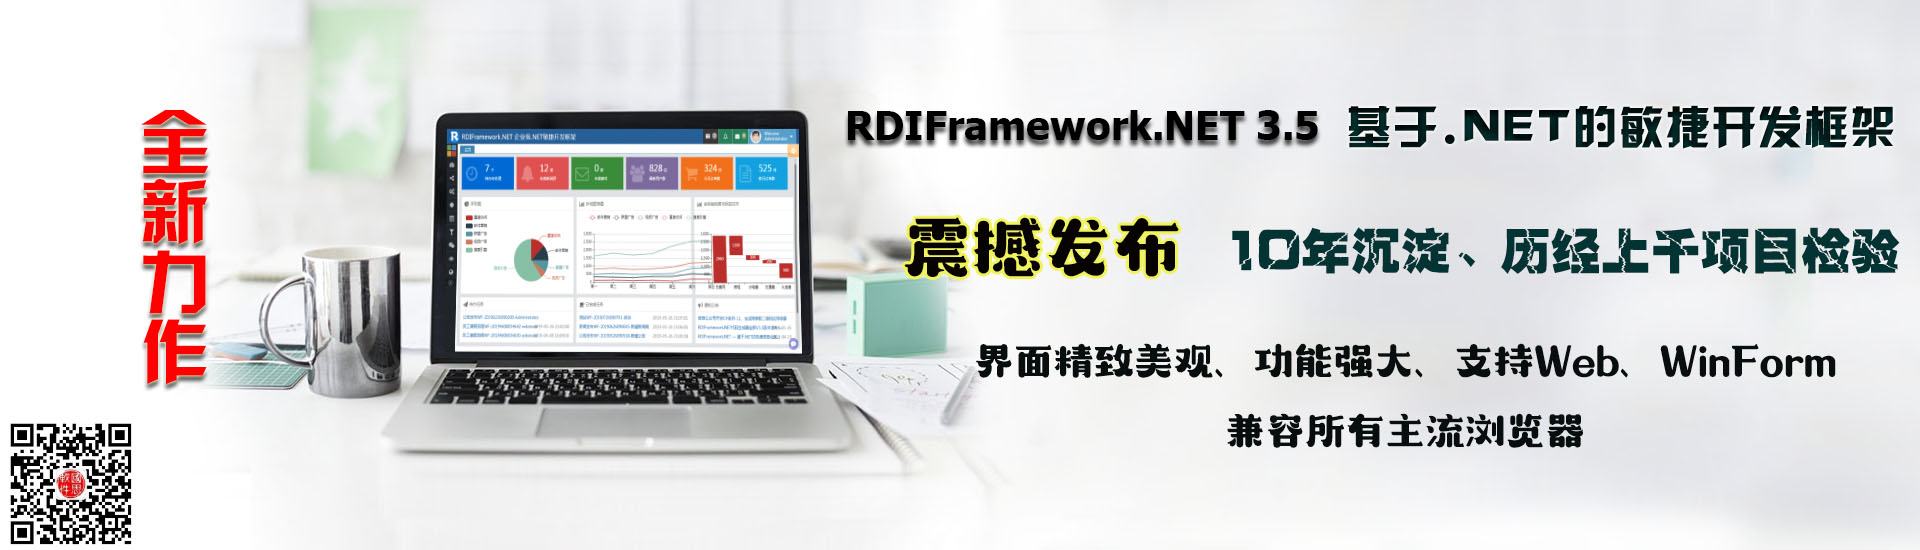 RDIFramework.NET ━ .NET敏捷开发框架V3.5版本全新发布 100%源码授权